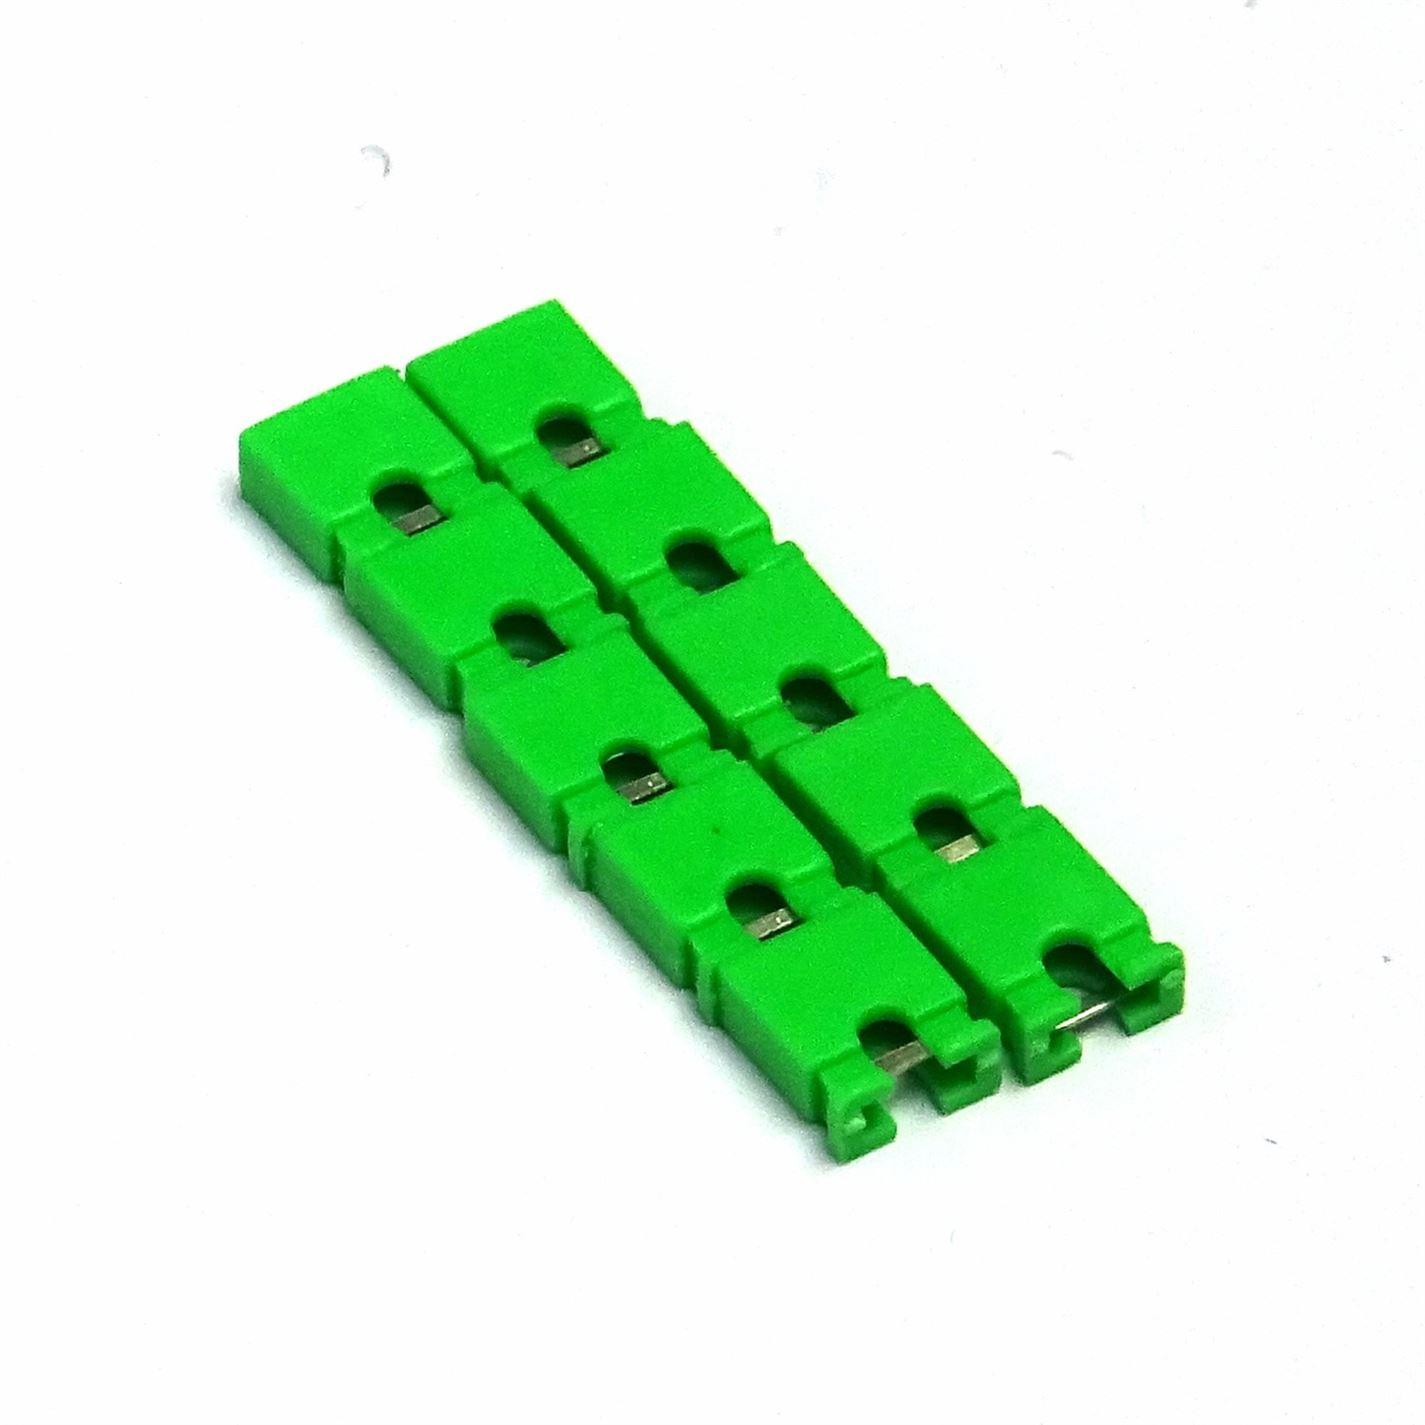 10 X 2.54mm Circuit Board Shunts Short Jumper Cap Mini Micro Header Green - UK Seller